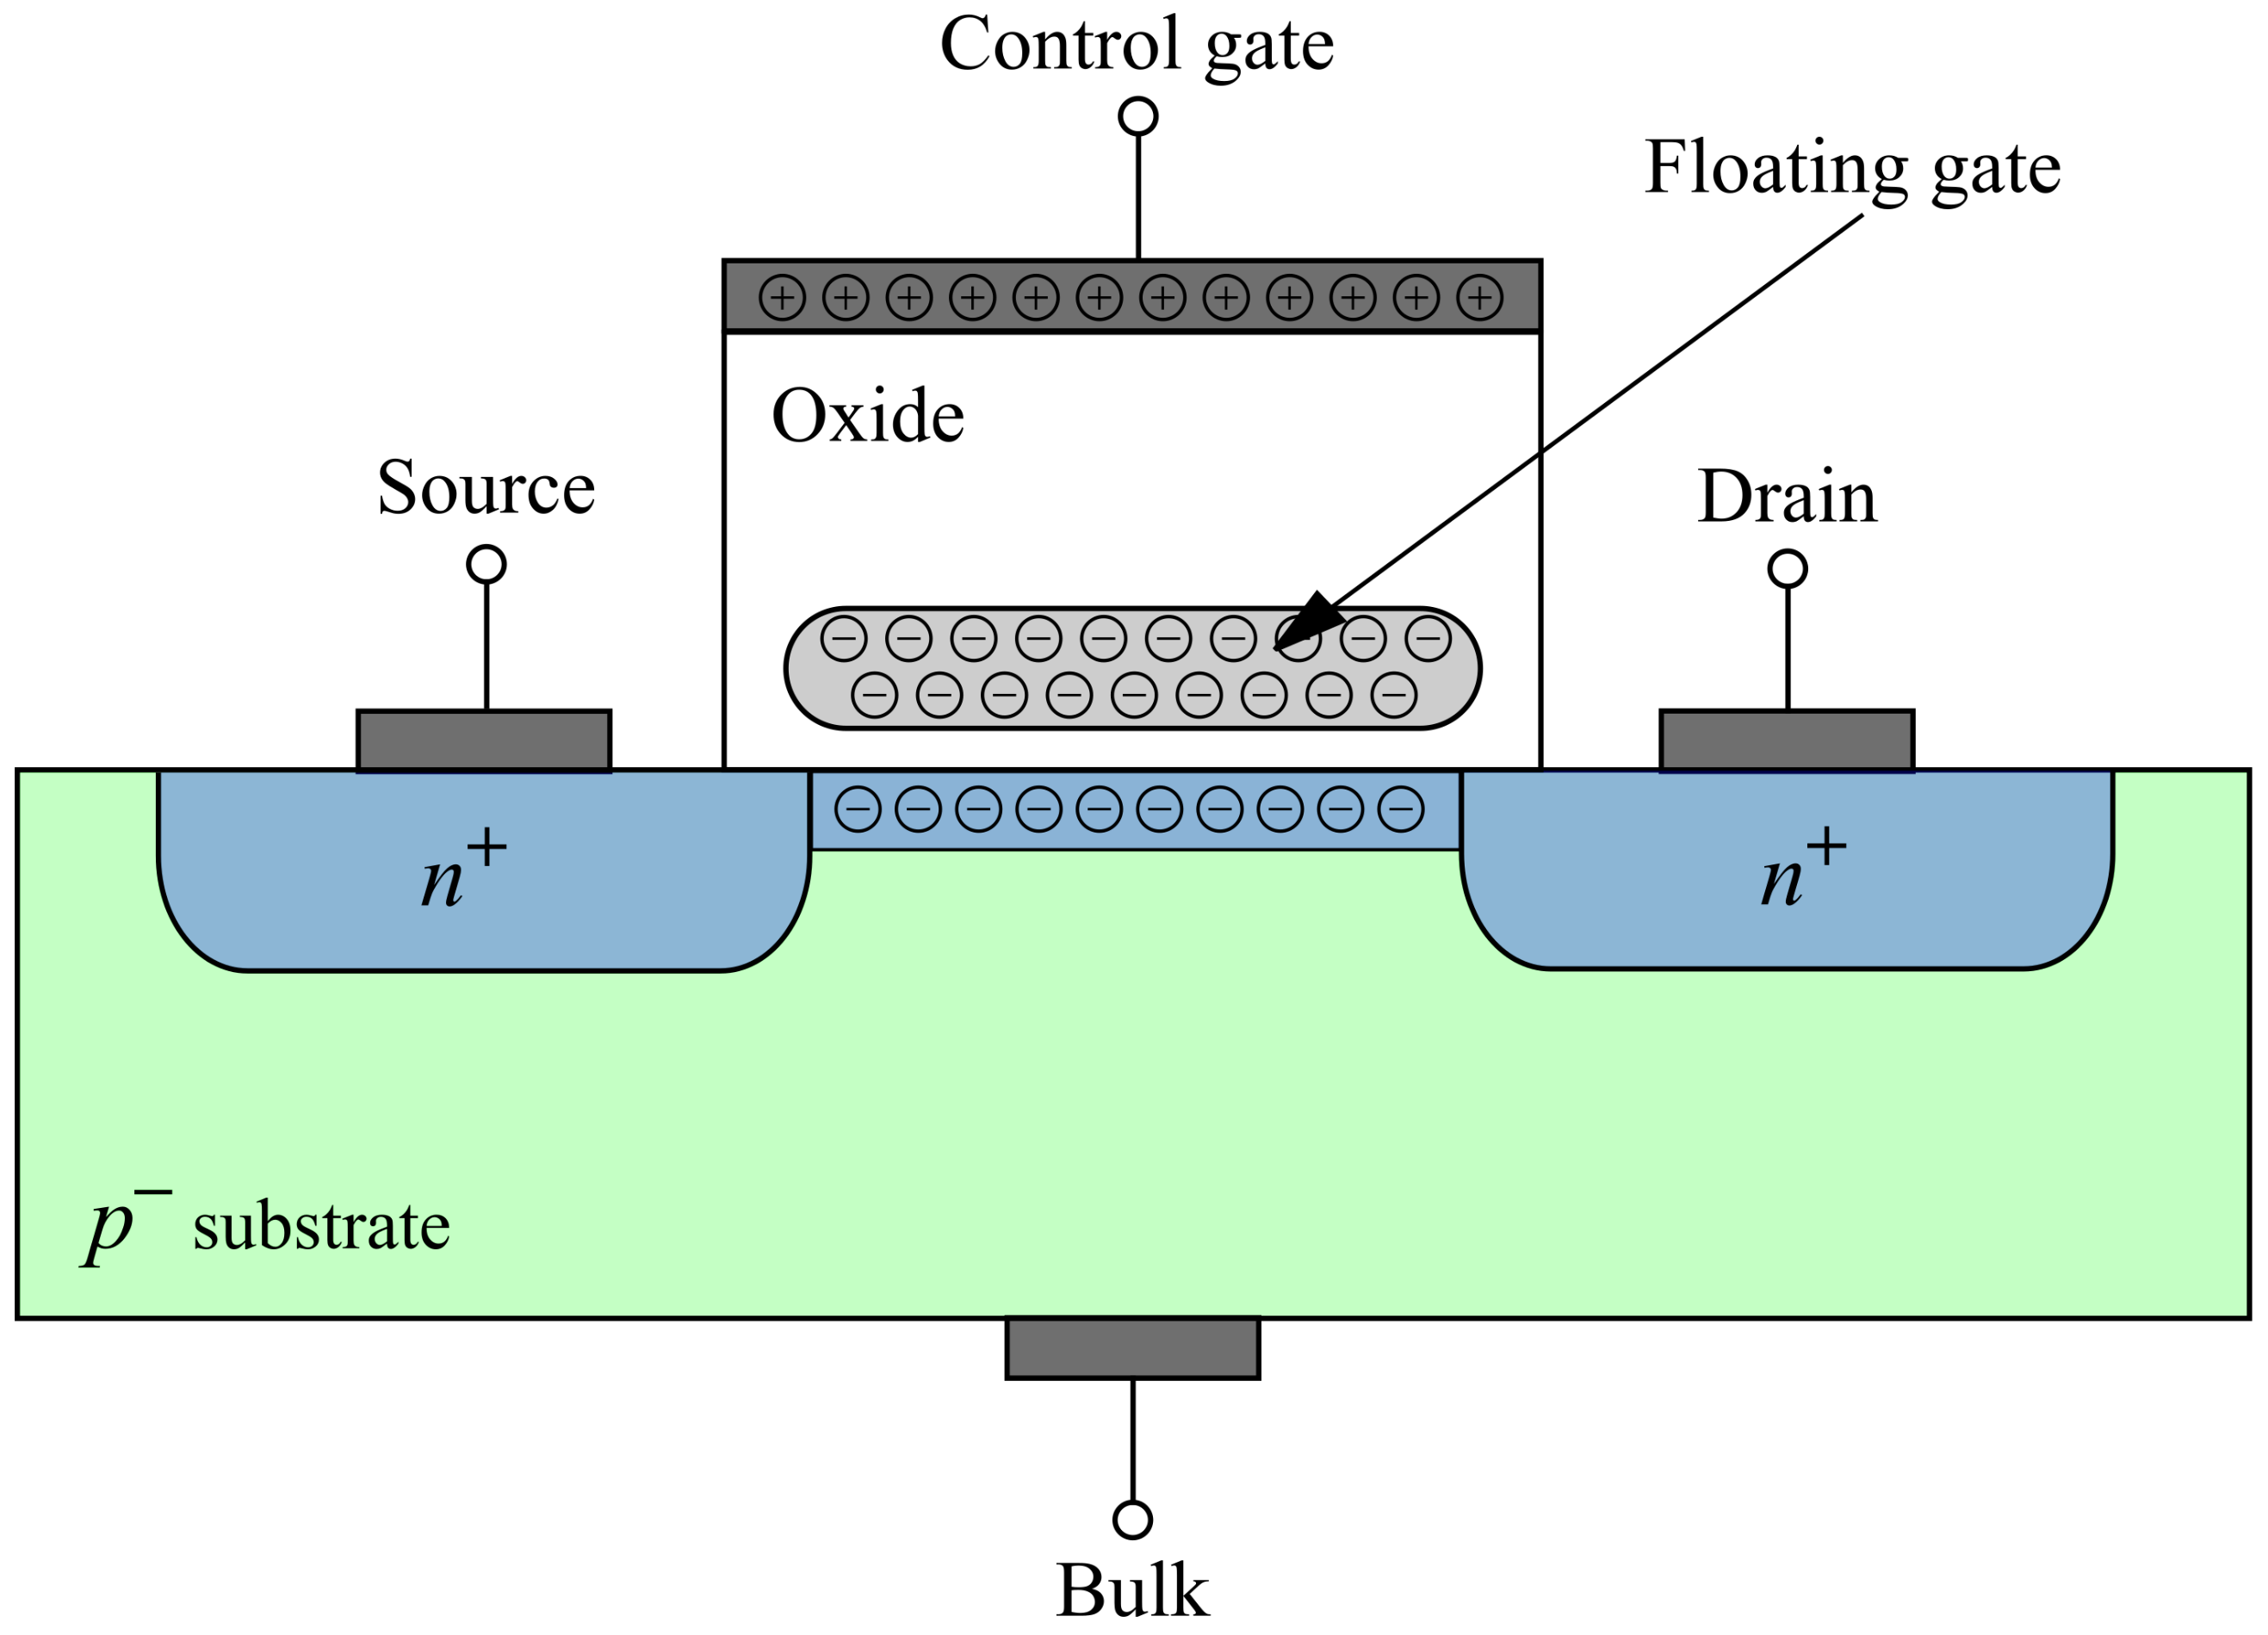 transistor gate